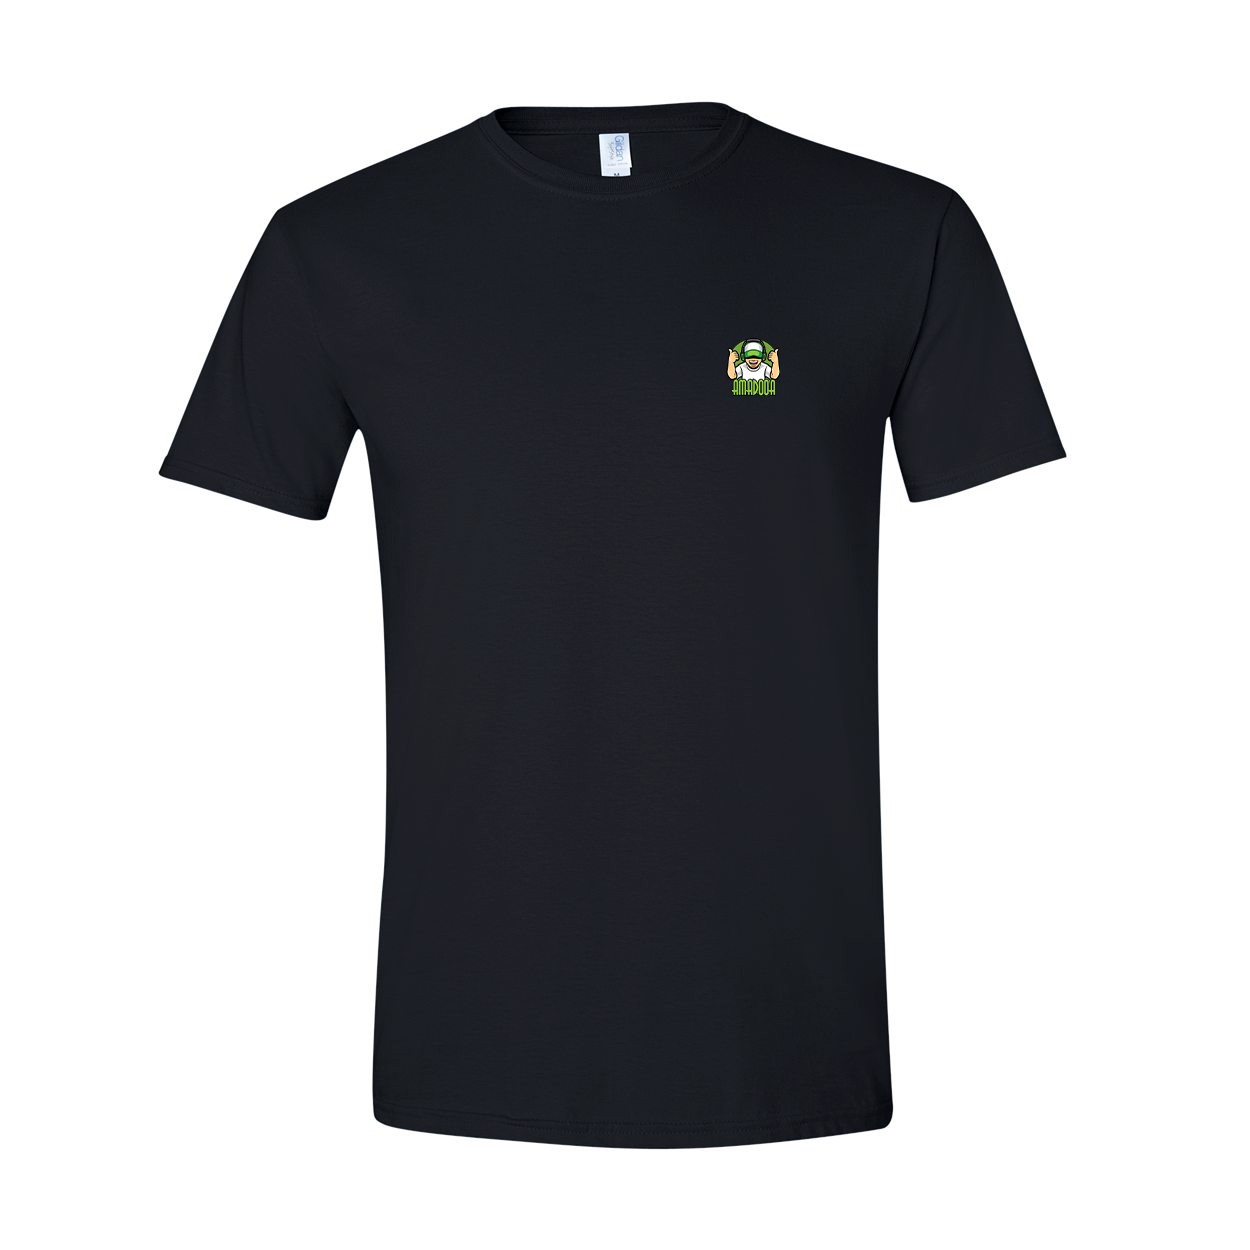 Amadooa Night Out T-Shirt Black (White Logo)